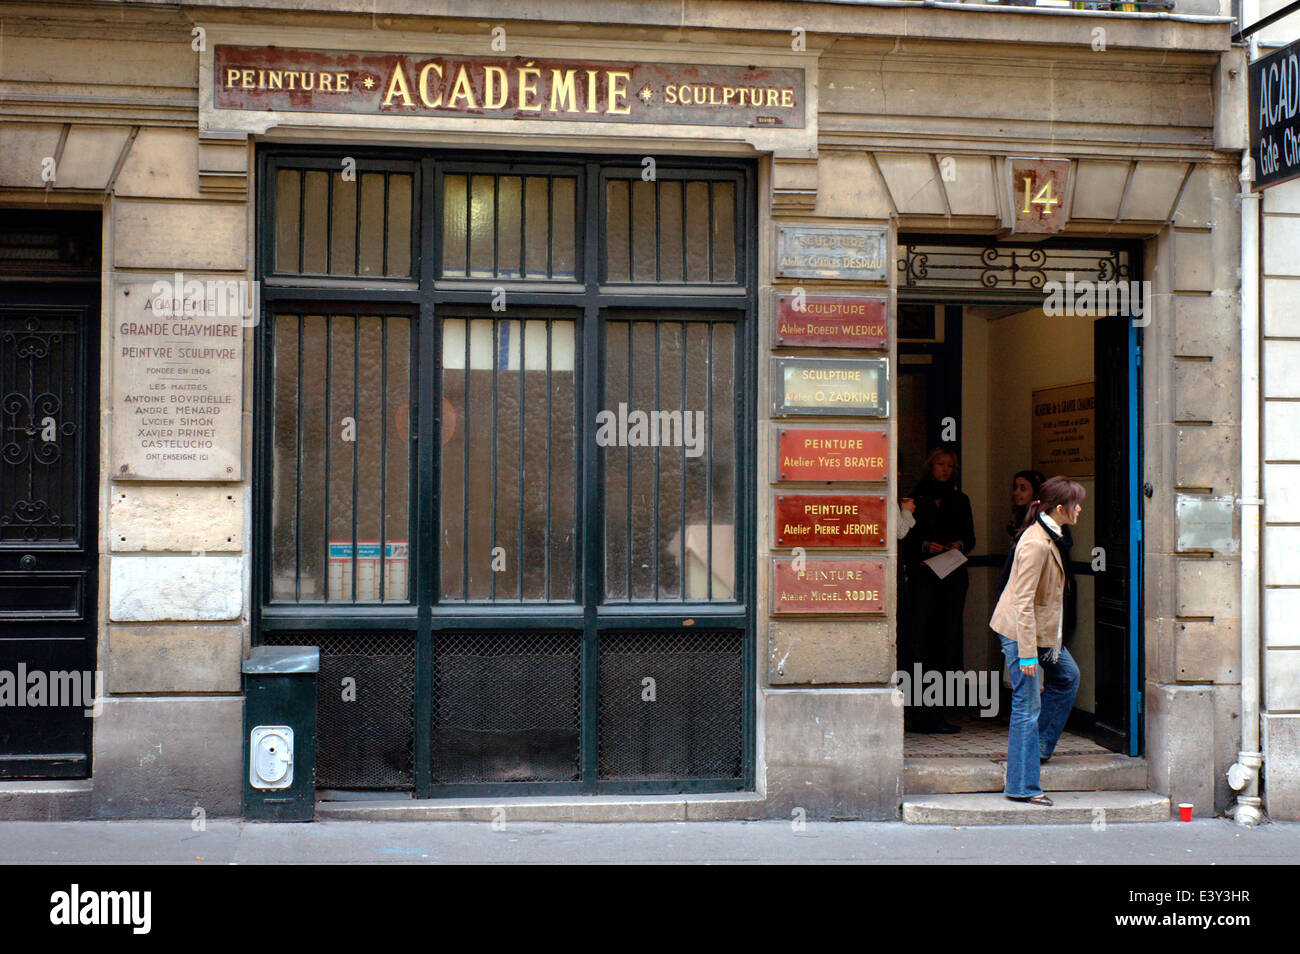 AJAXNETPHOTO. FRANCE,PARIS. - ARTISTS STUDIOS-ART ACADEMY-ACADEMIE PEINTURE, SCULPTURE IN RUE DES CHAUMIER. PHOTO:JONATHAN EASTLAND. Stock Photo